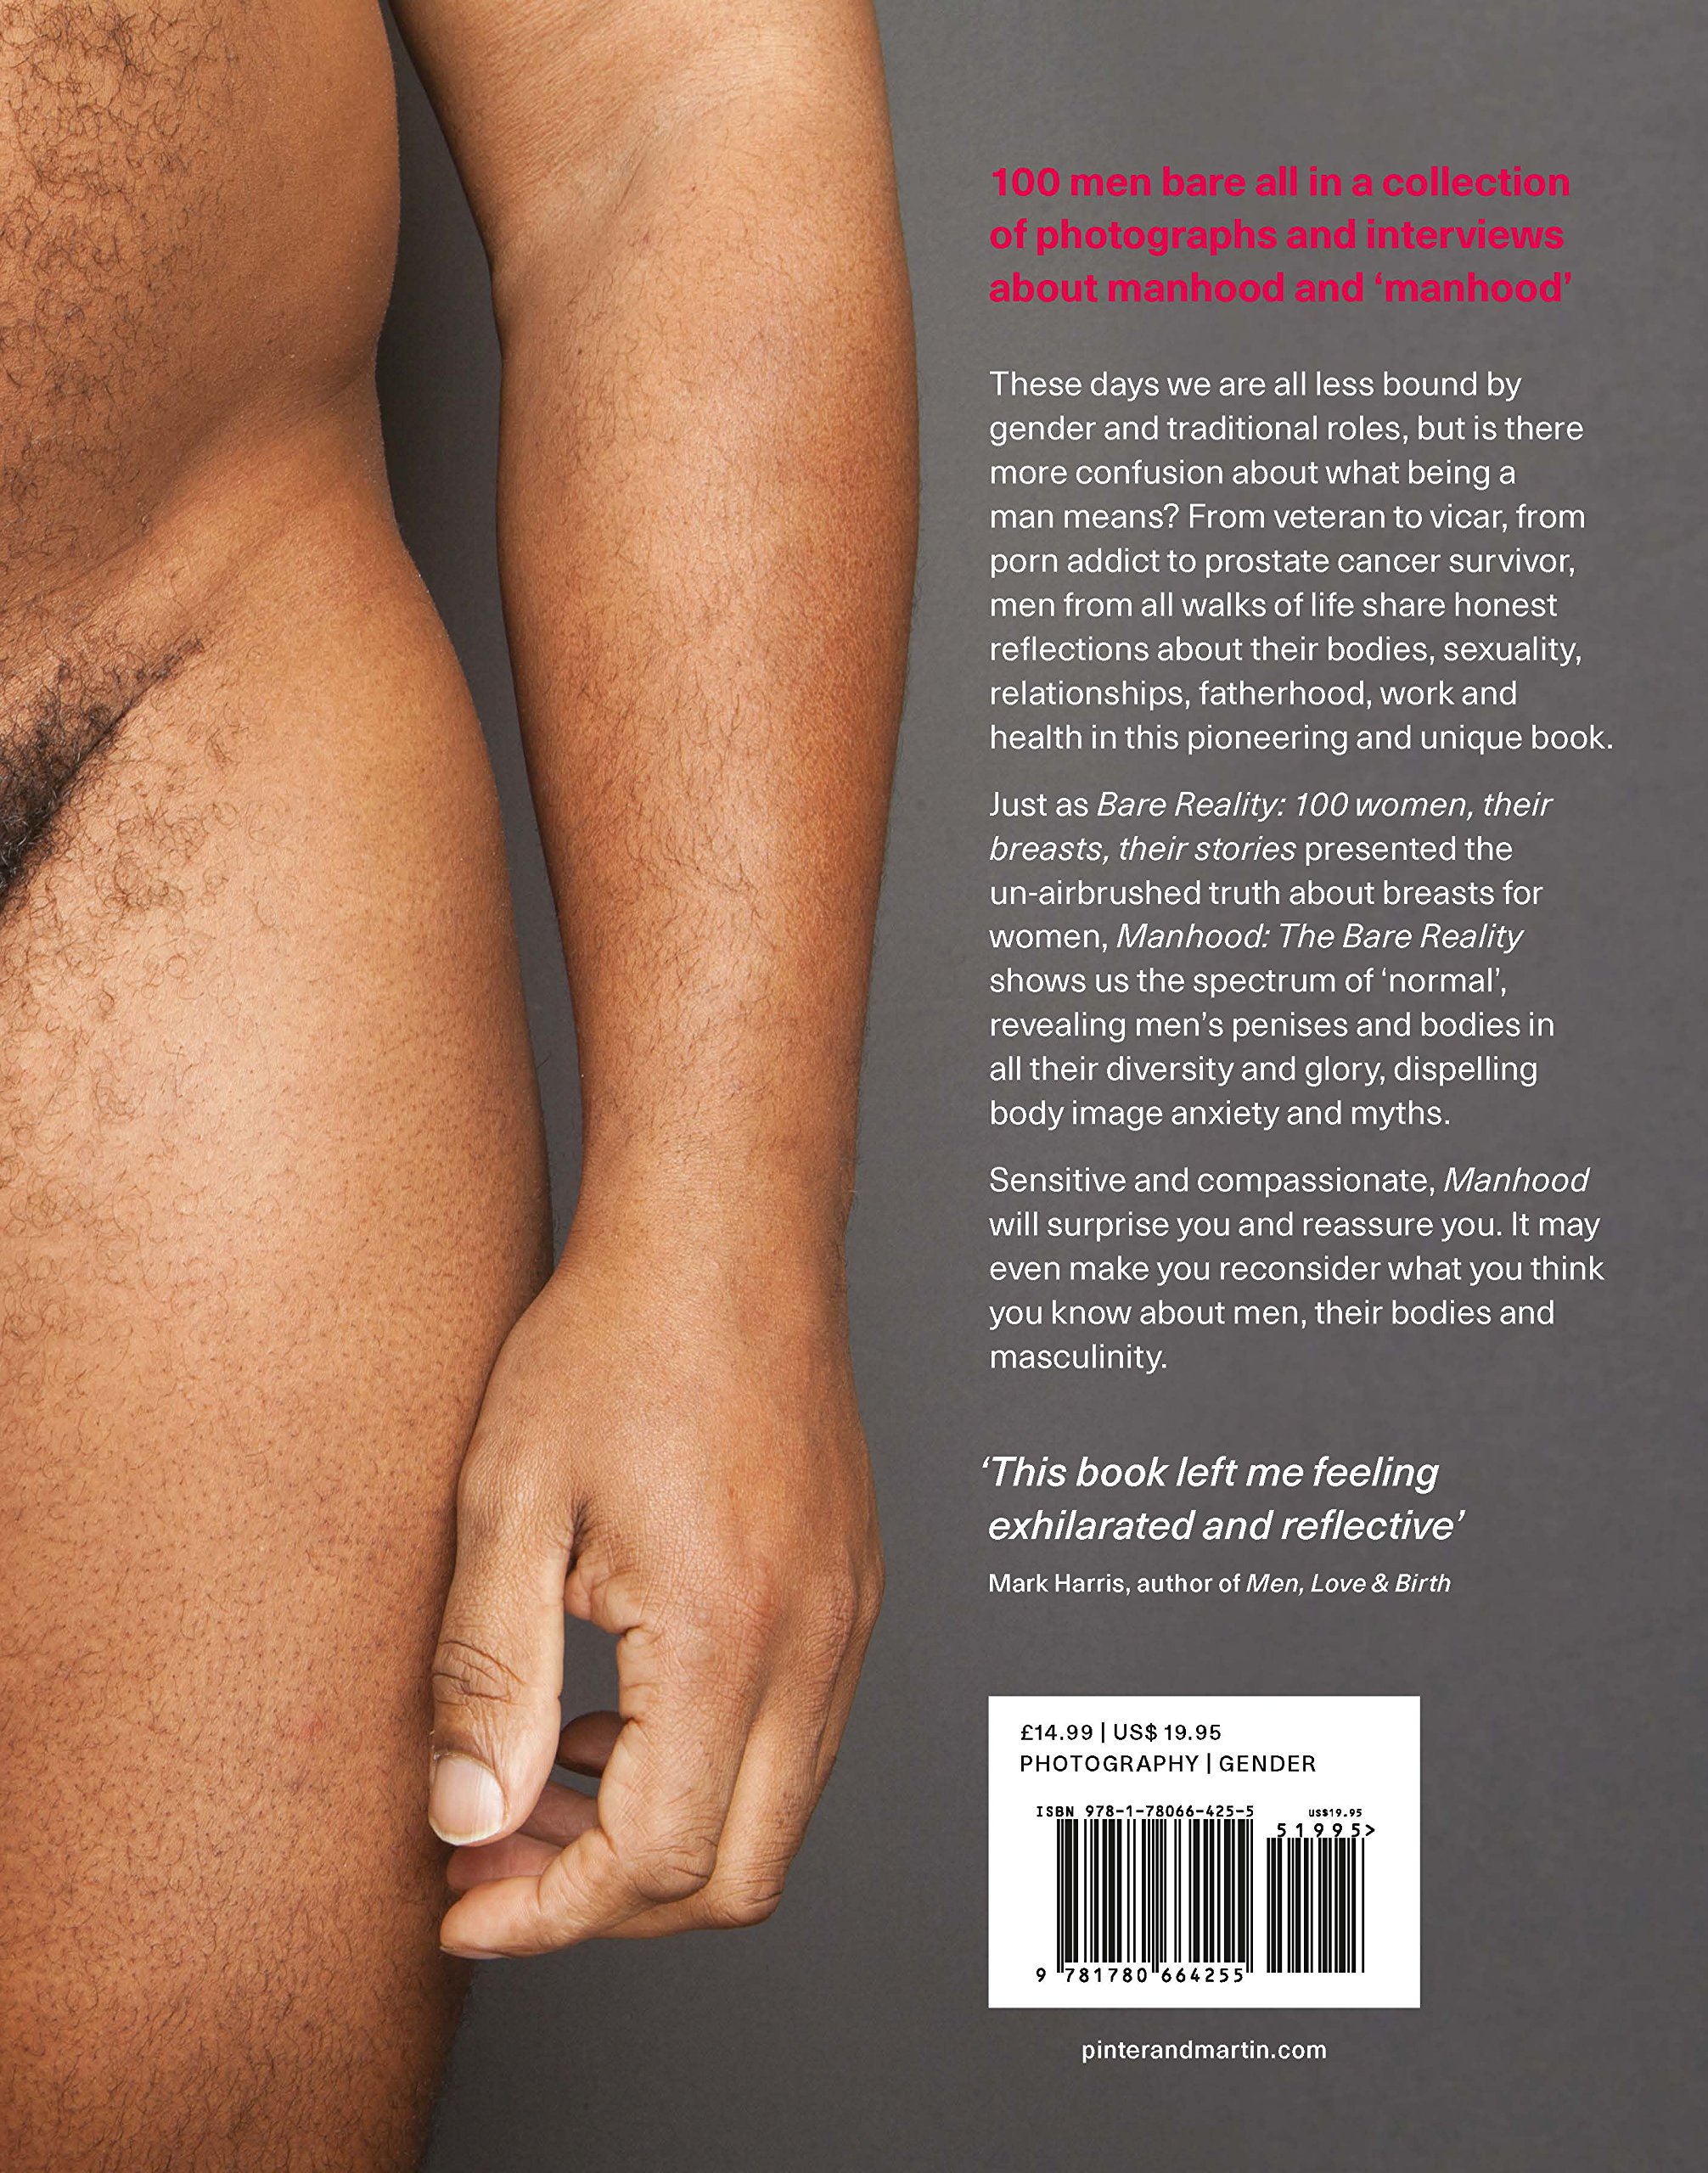 Manhood: The Bare Reality: Amazon.co.uk: Laura Dodsworth: Books